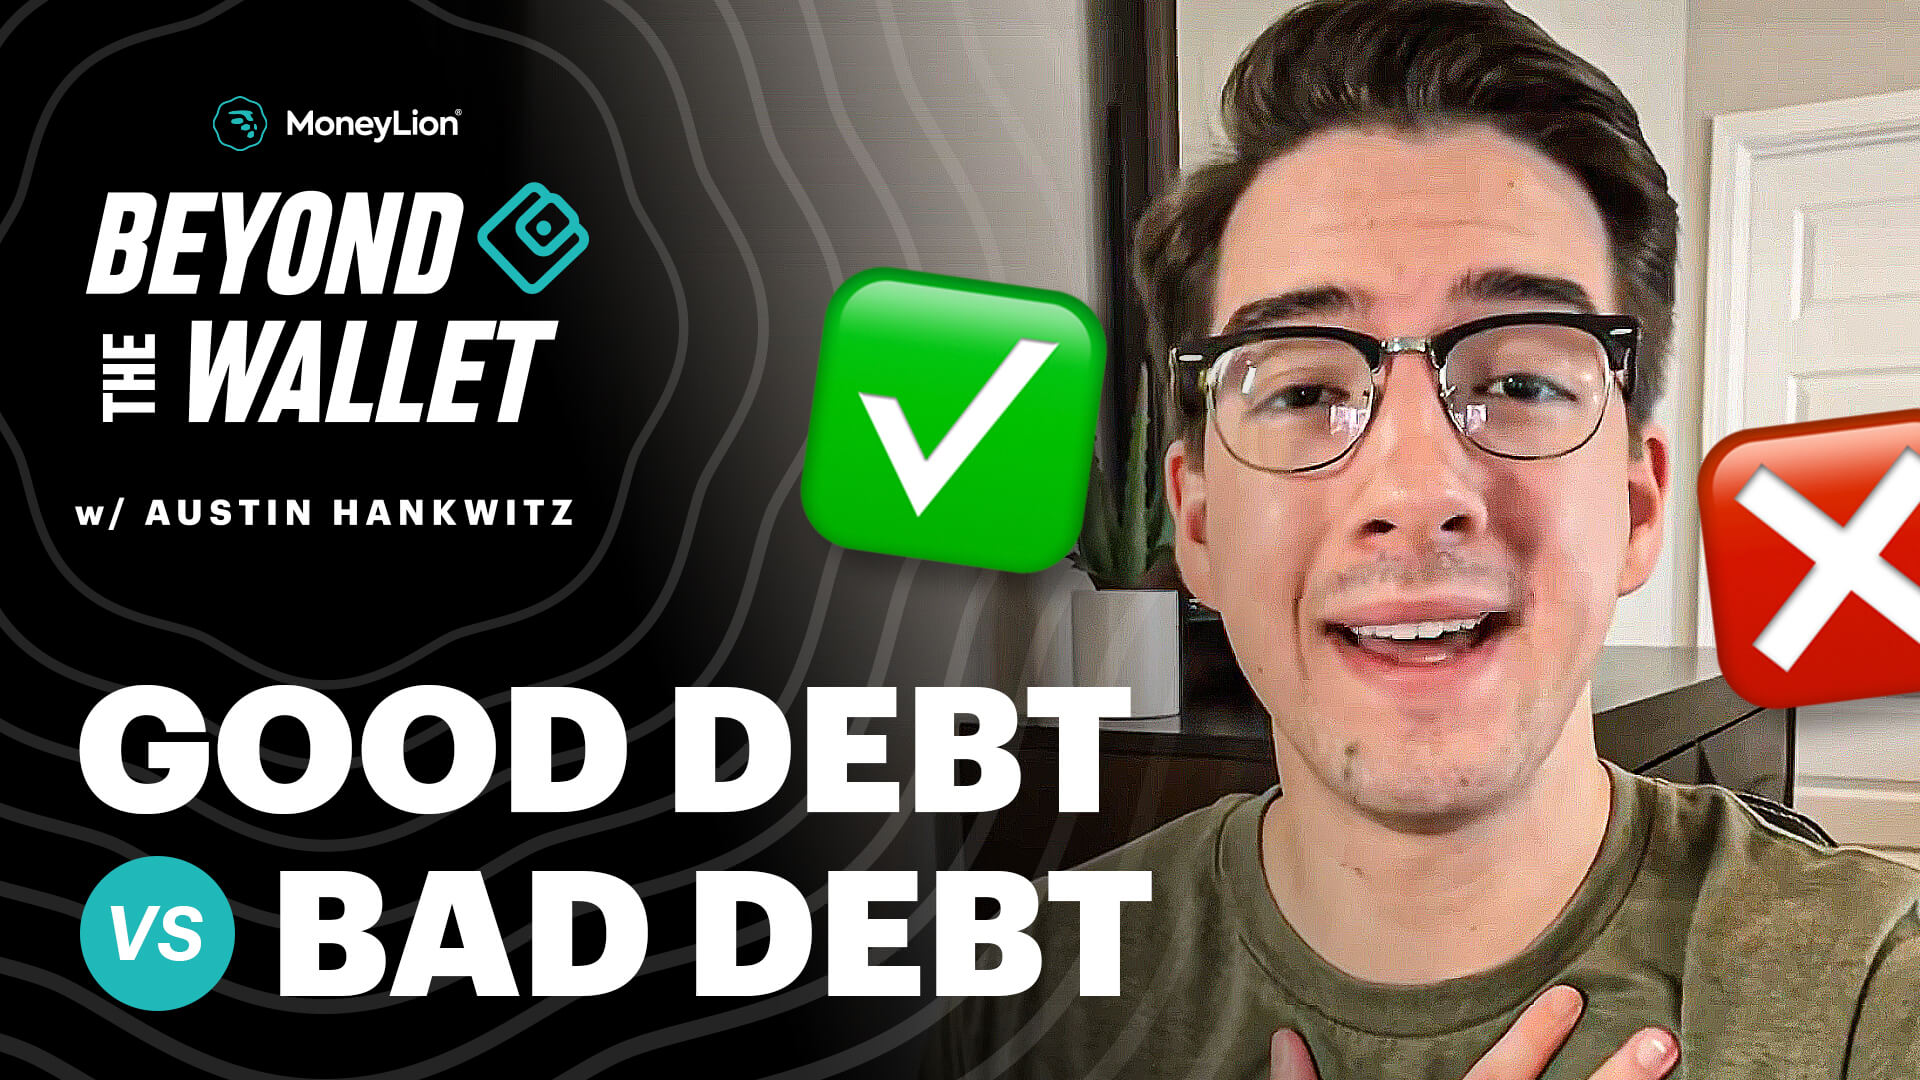 Good debt, bad debt